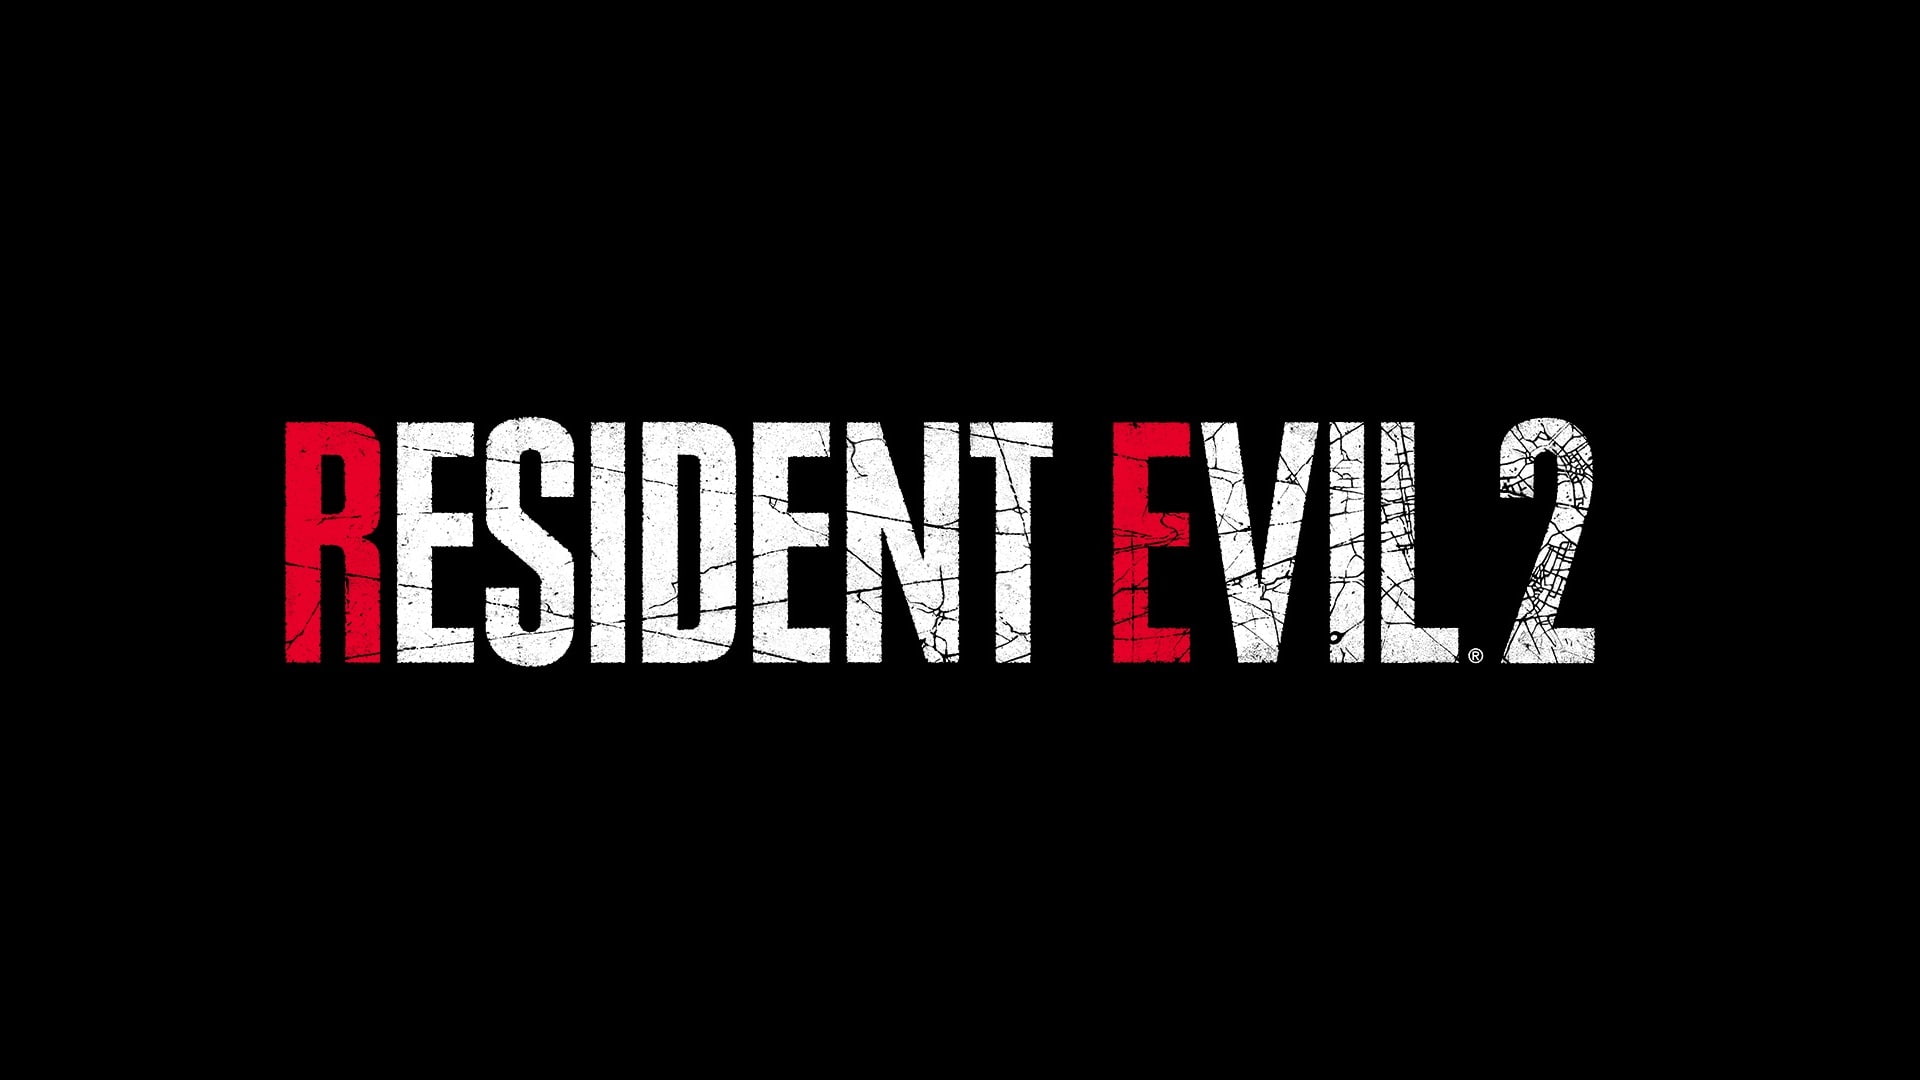 Resident Evil 2, video games, text, western script, communication